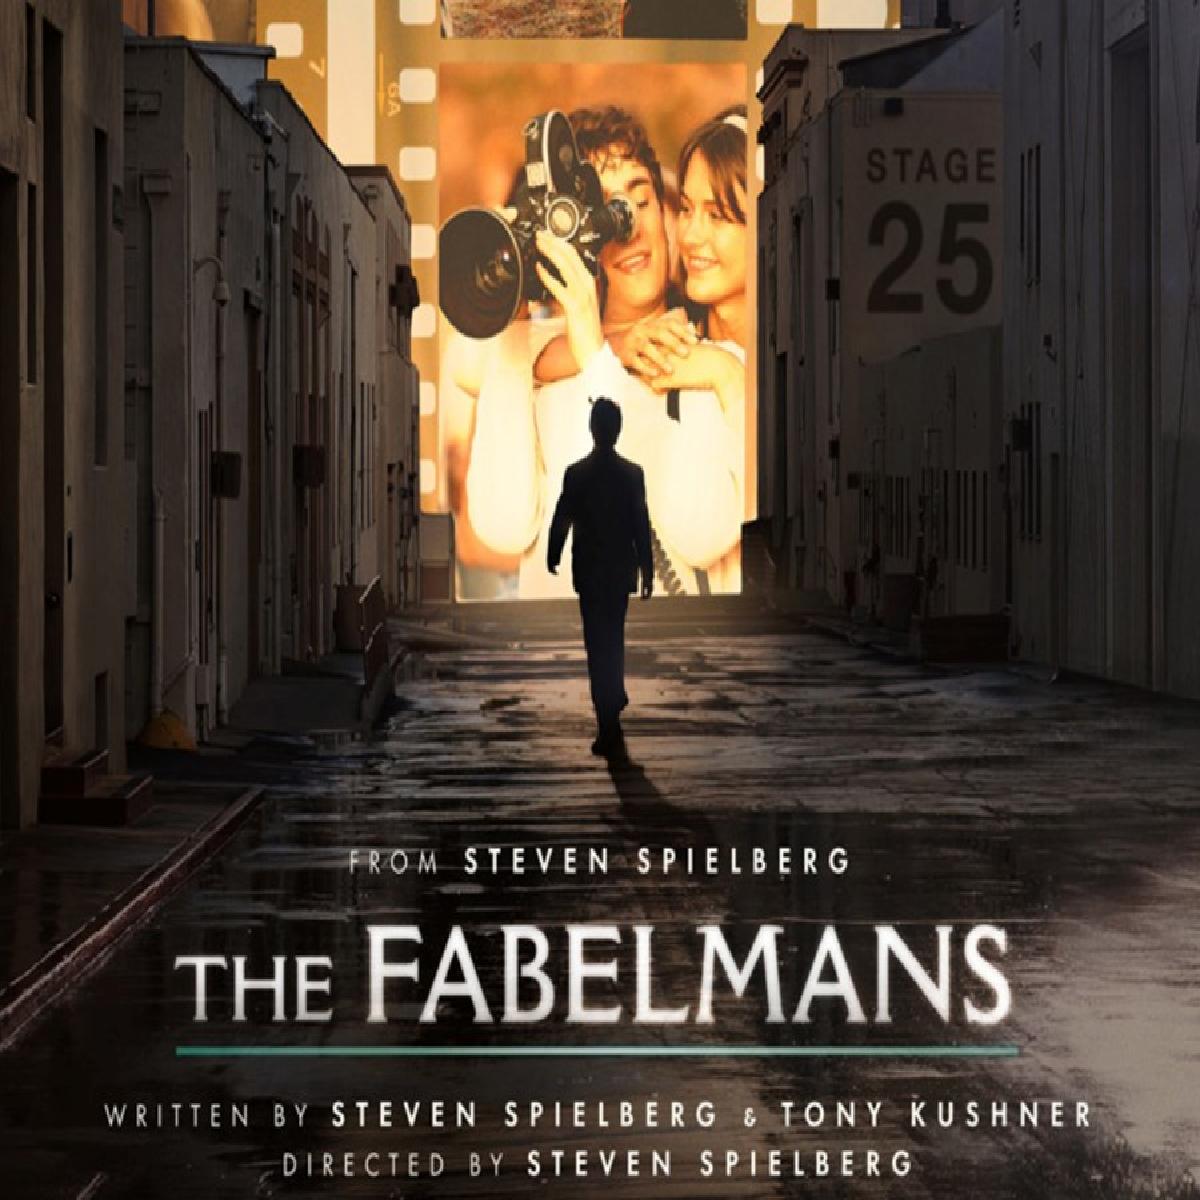 The Fabelmans Trailer Is Out, Helmed By Steven Spielberg